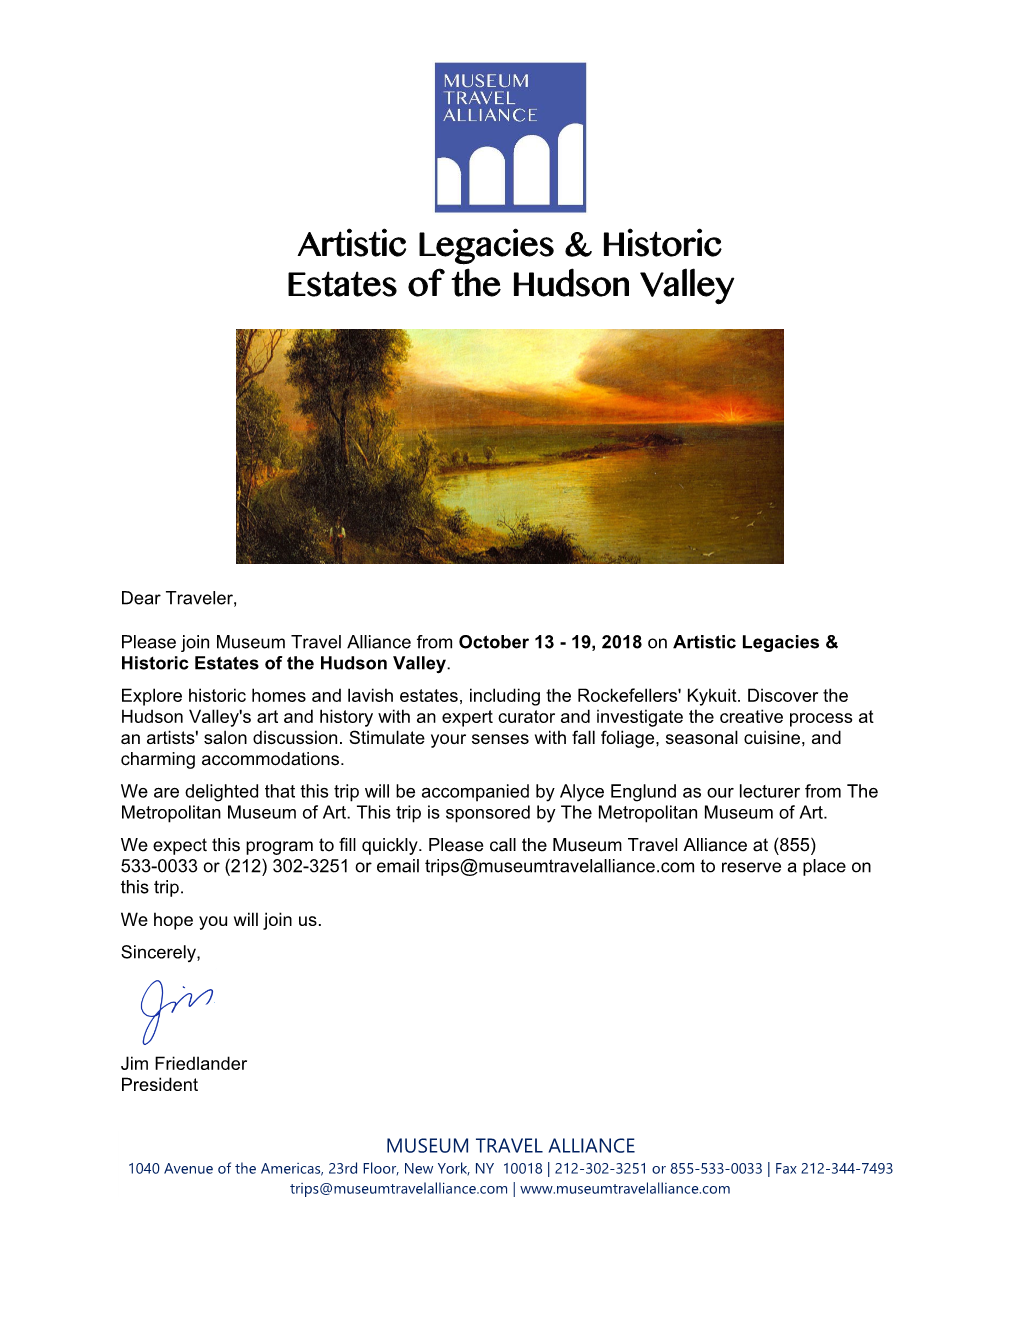 Artistic Legacies & Historic Estates of the Hudson Valley